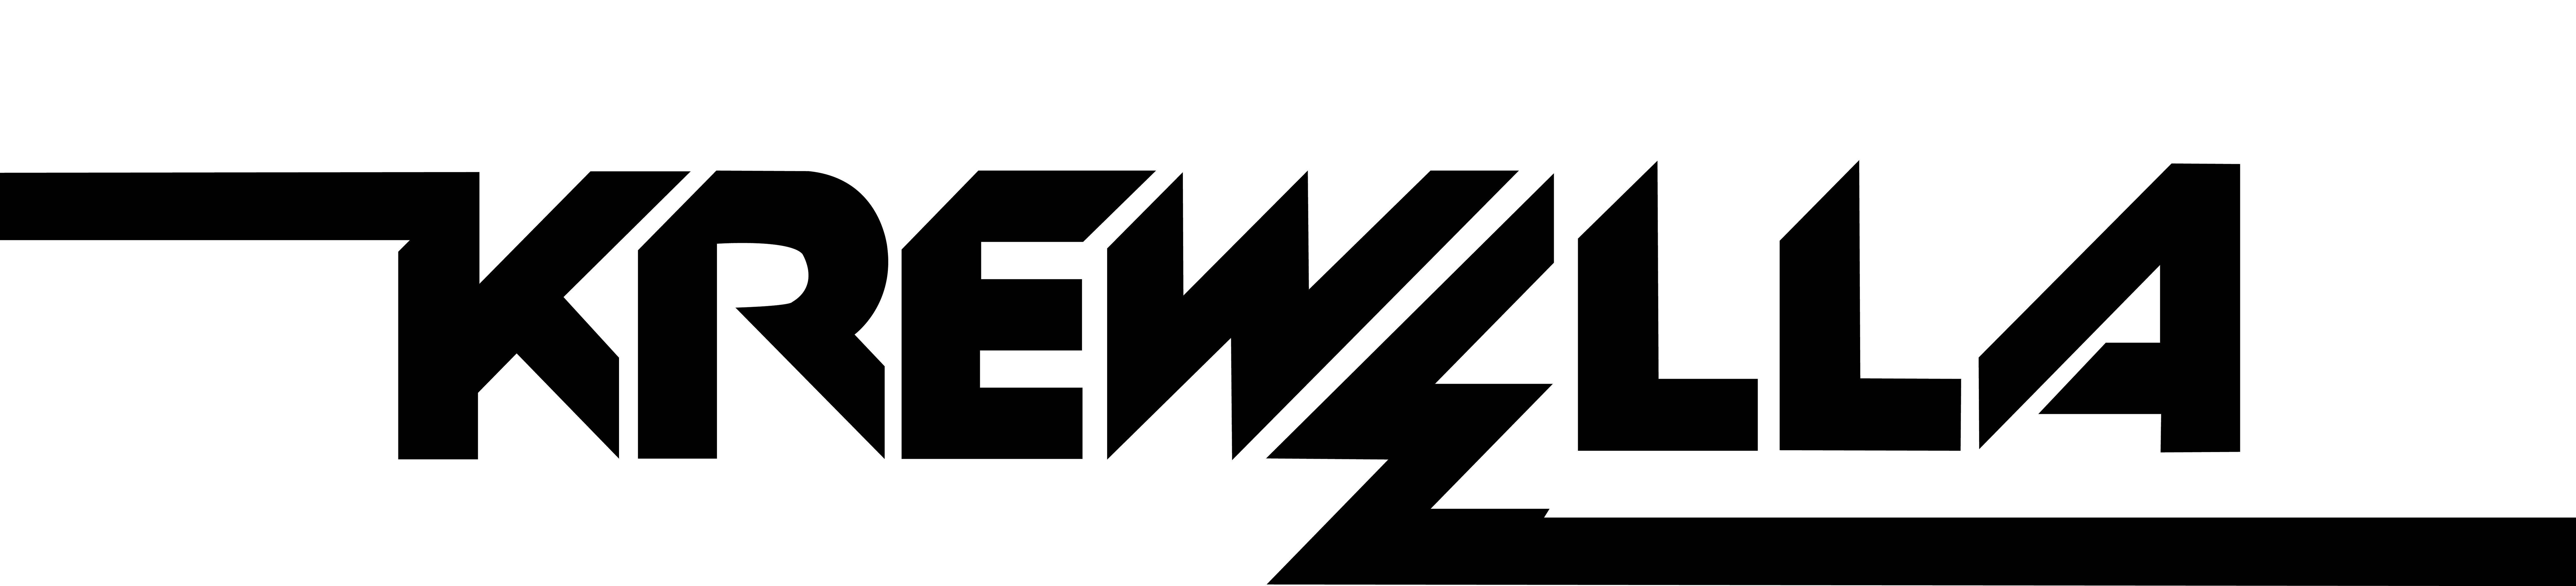 Krewella_ (10133×2305). DJ Logos. Krewella, Dj